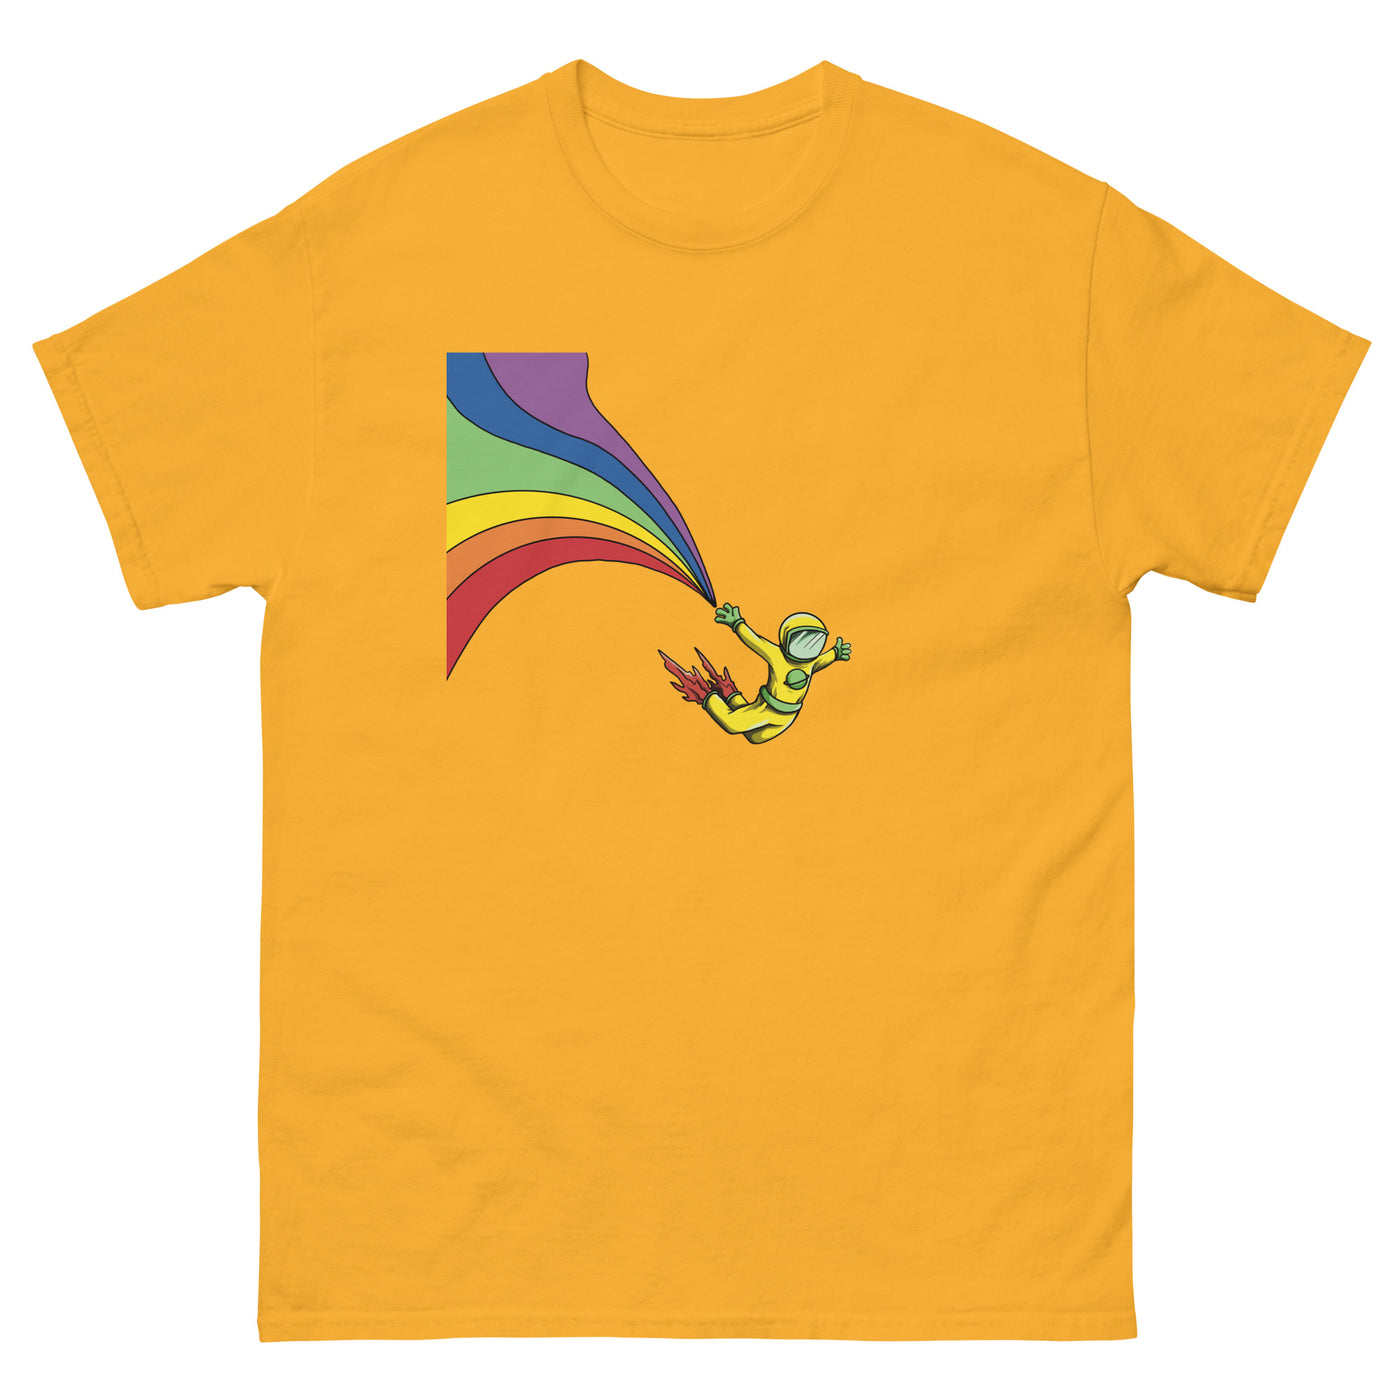 Rainbow astronaut T-shirt